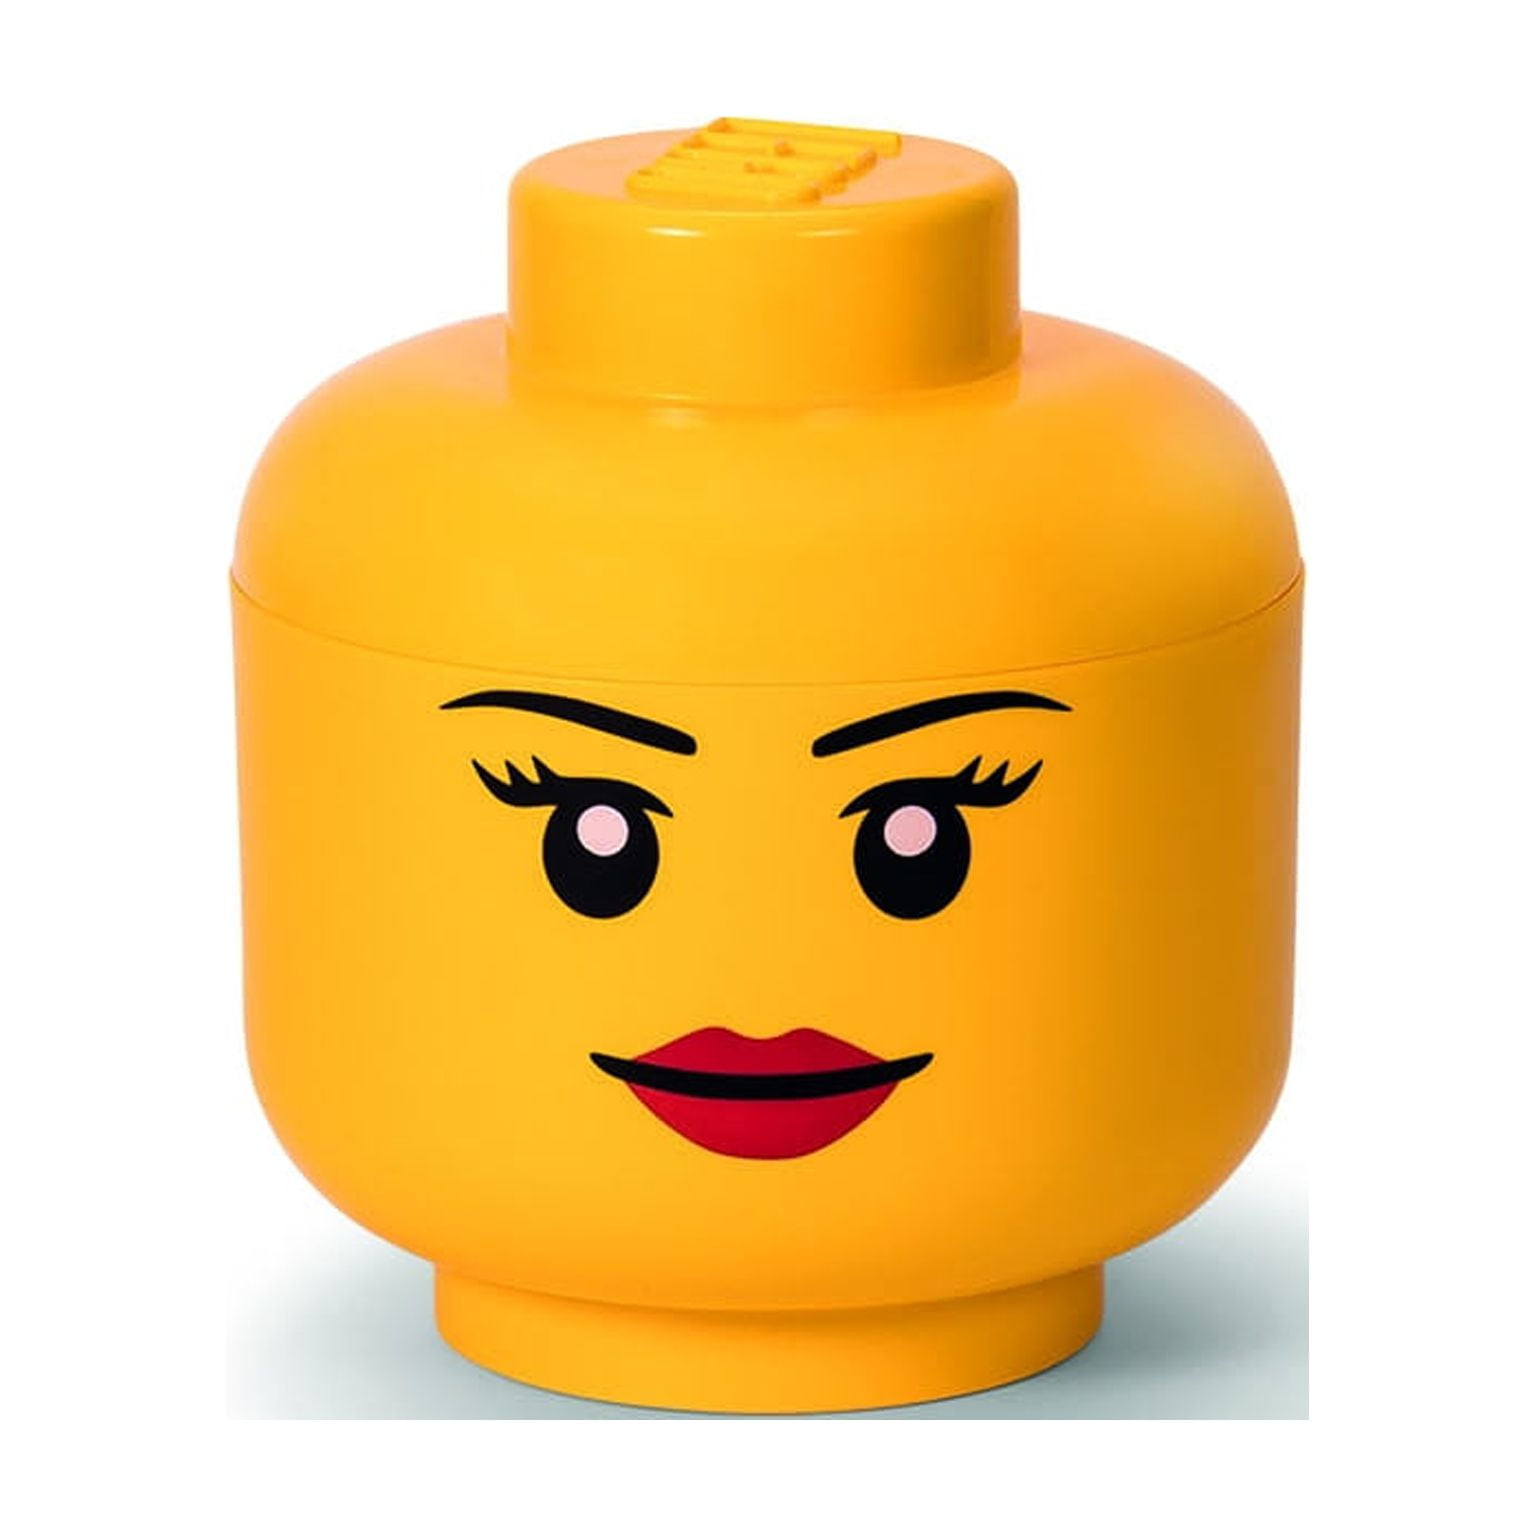 LEGO Large Storage Head